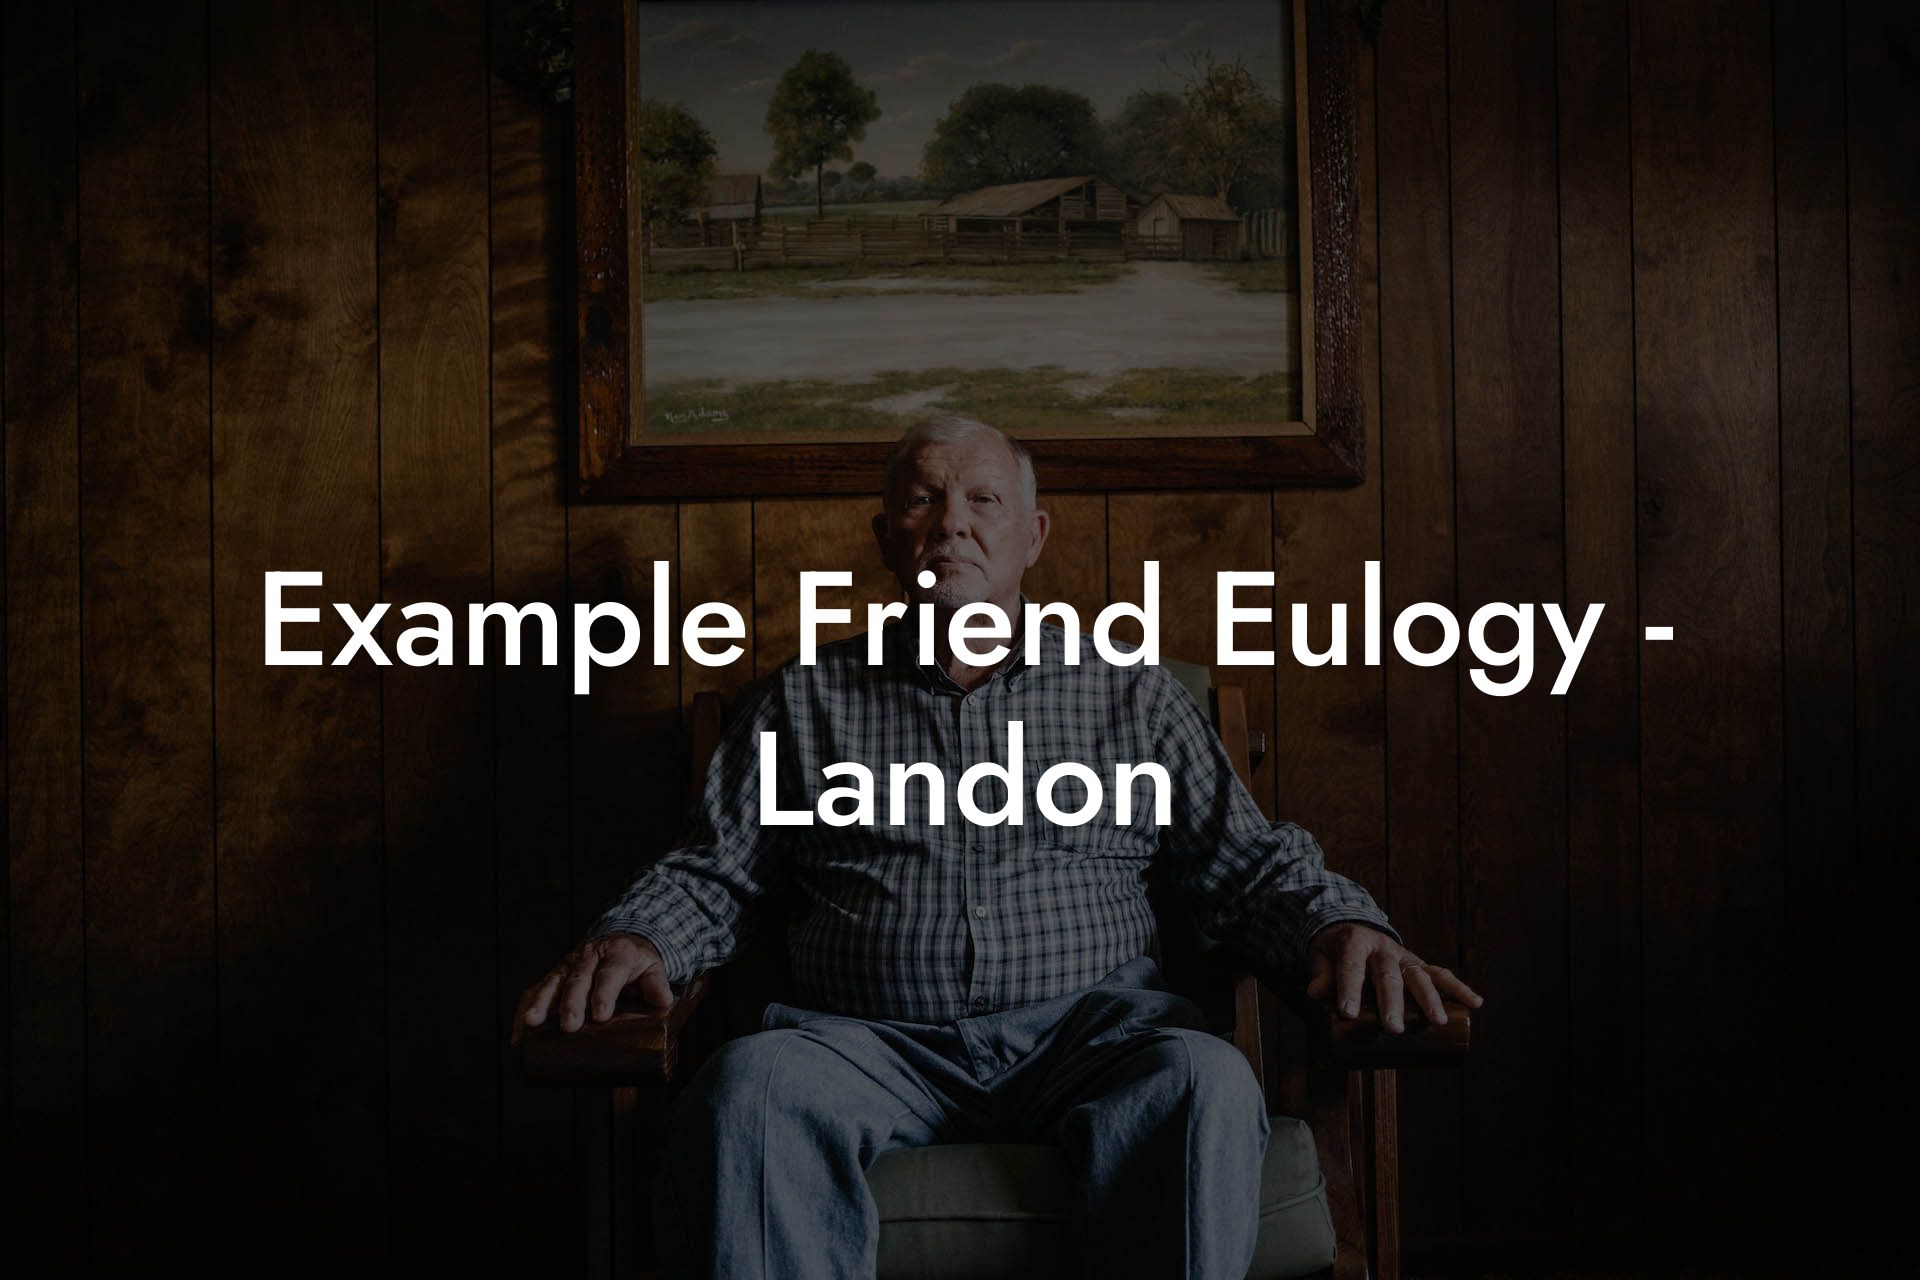 Example Friend Eulogy - Landon